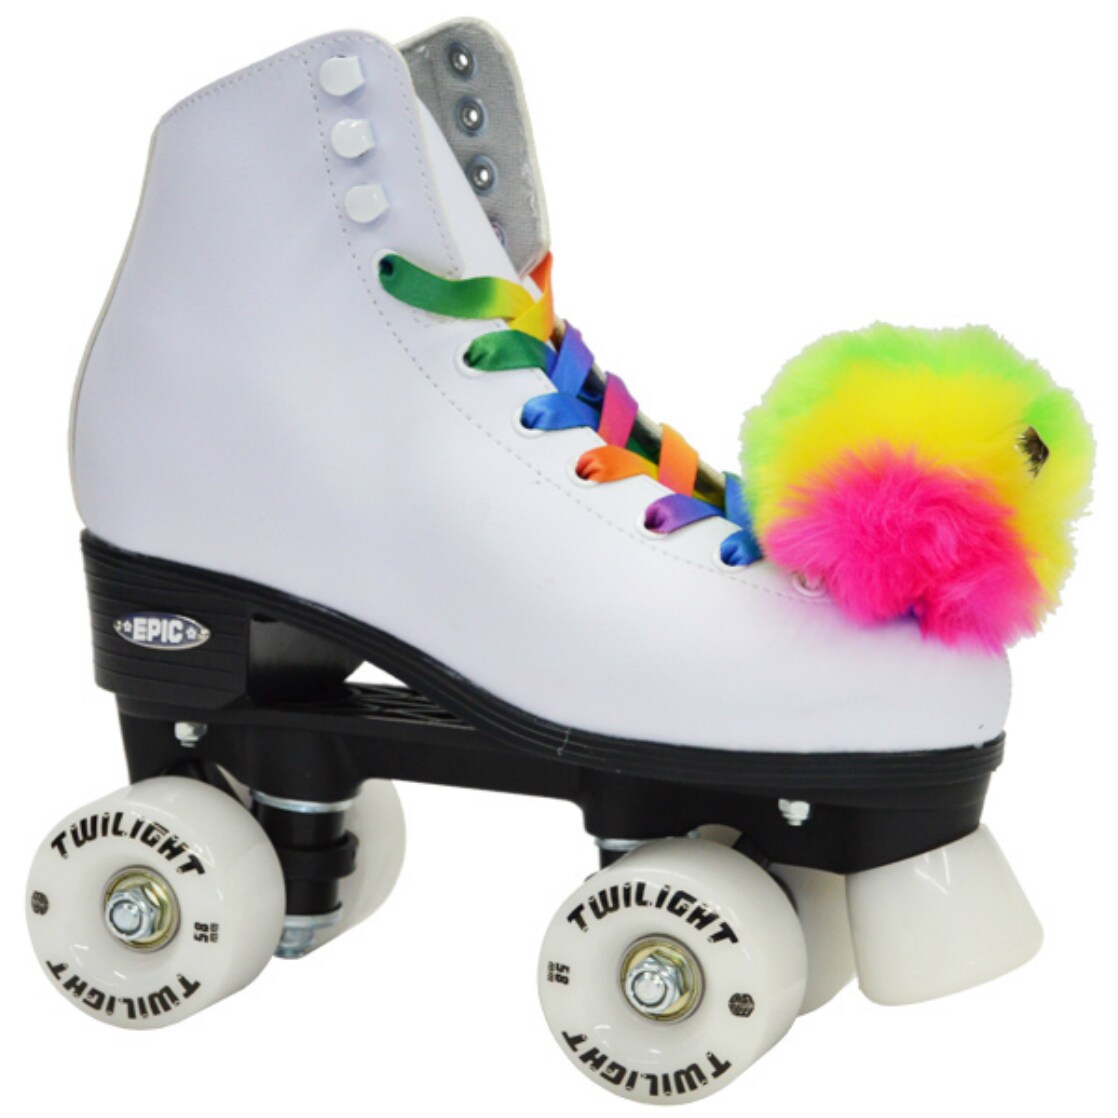 rainbow roller boots